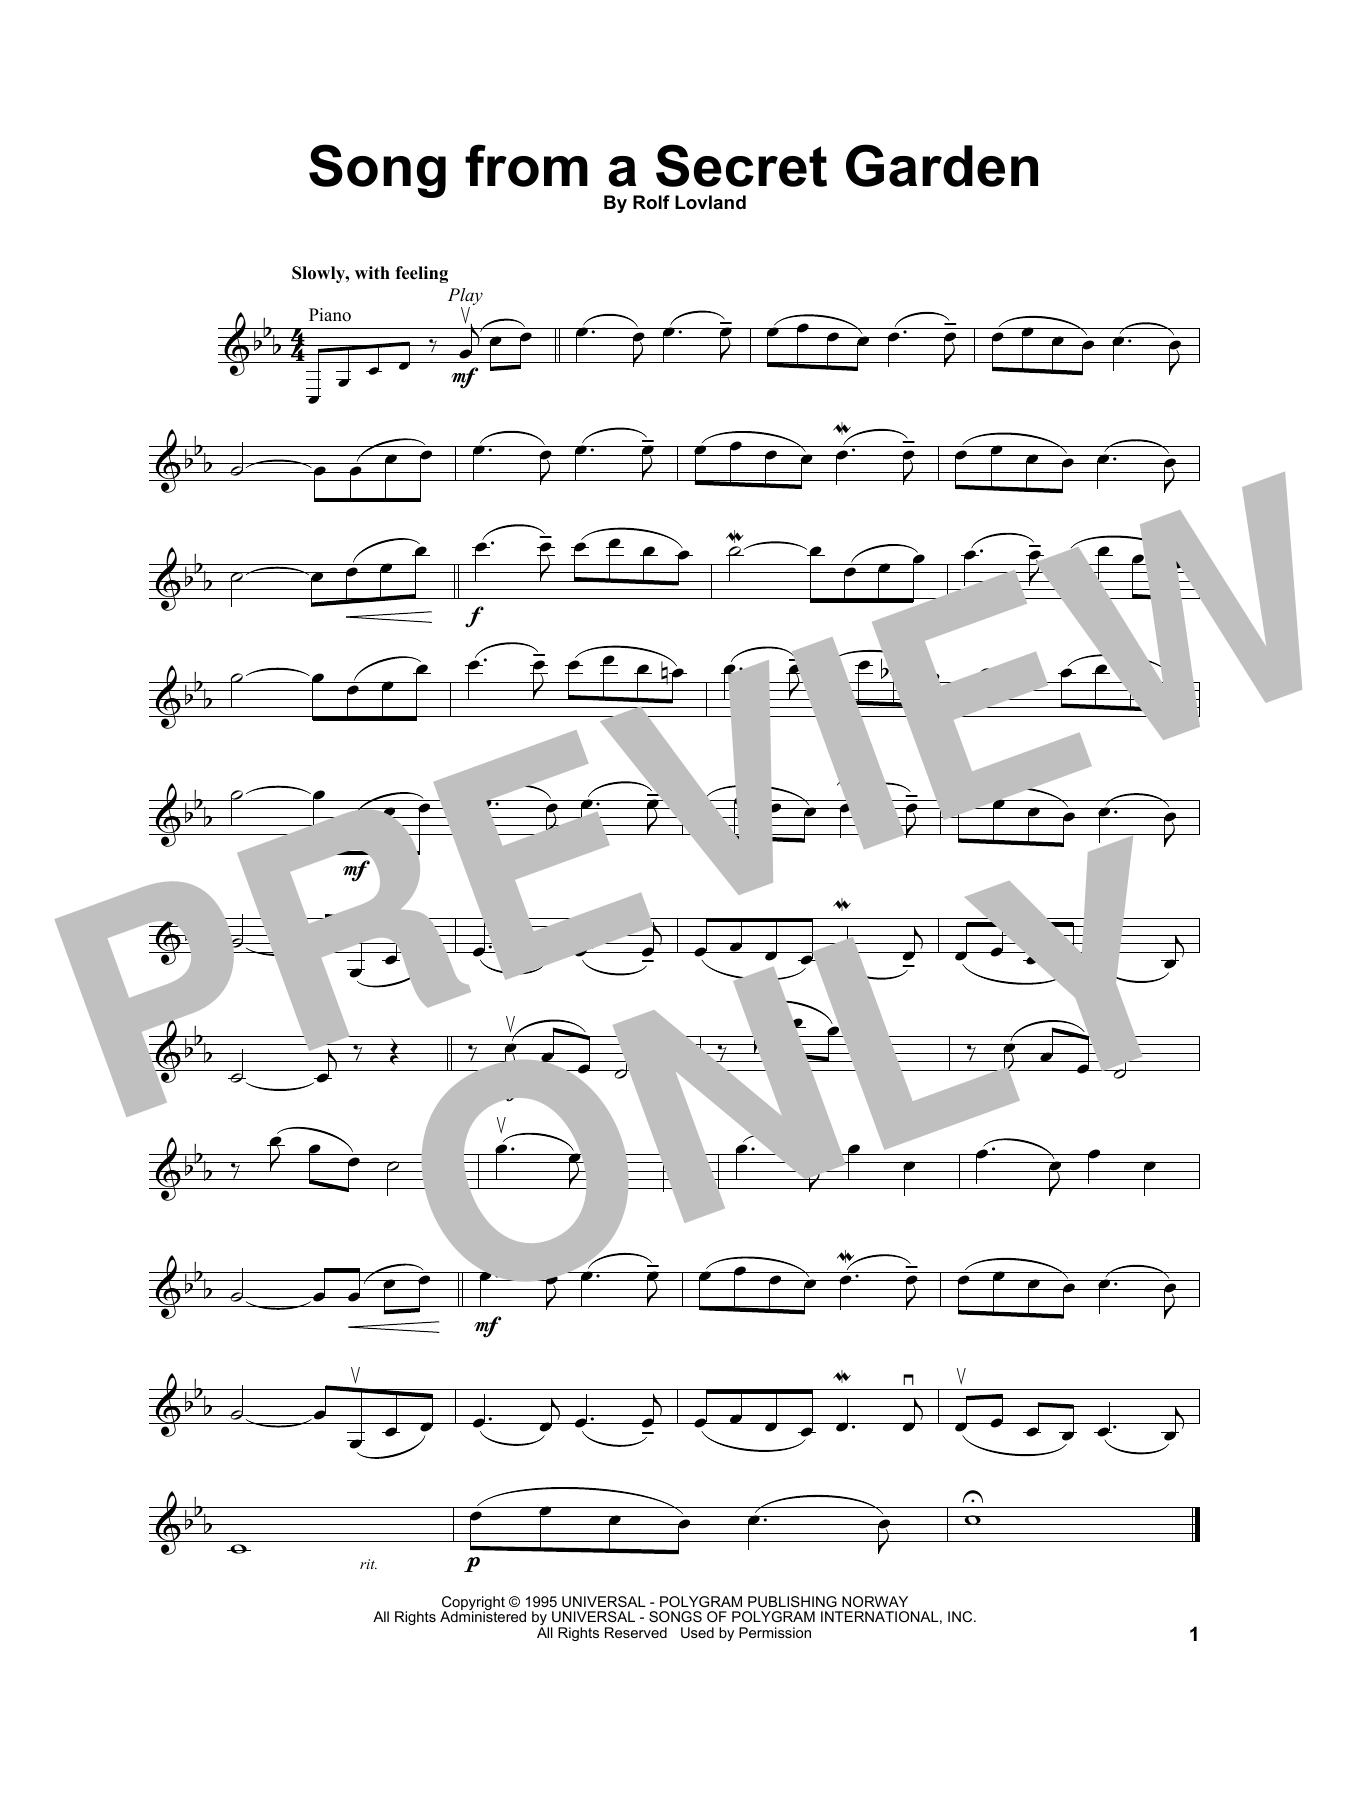 Secret Garden Song From A Secret Garden sheet music notes and chords arranged for Flute Solo